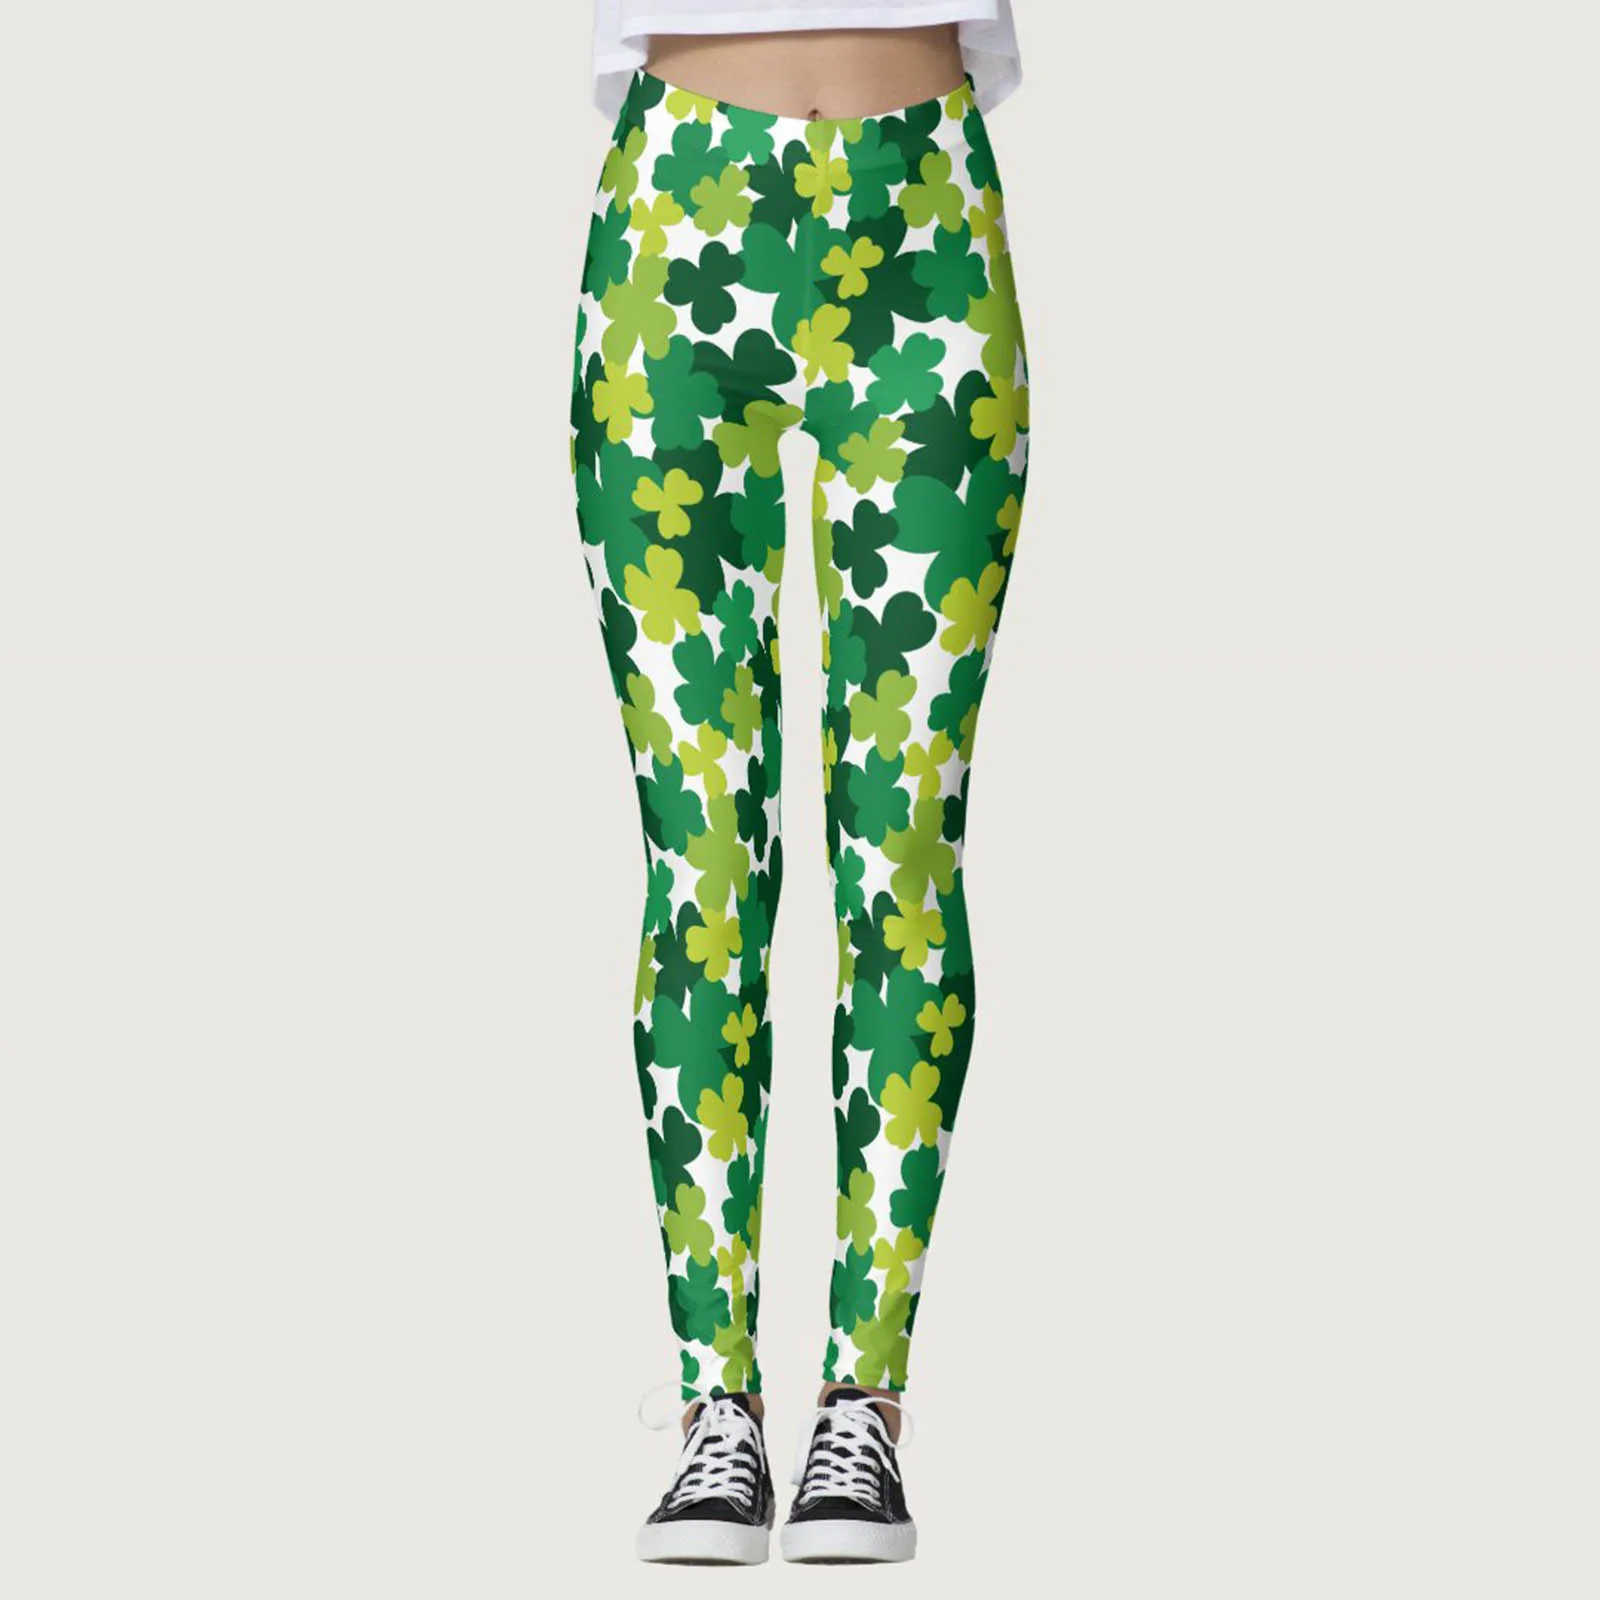 

Green Print Women's Paddy Stripes Pants Leggings Yoga Running Outwear Pants Casual Fashion High Stretch Sports Tights Leggings